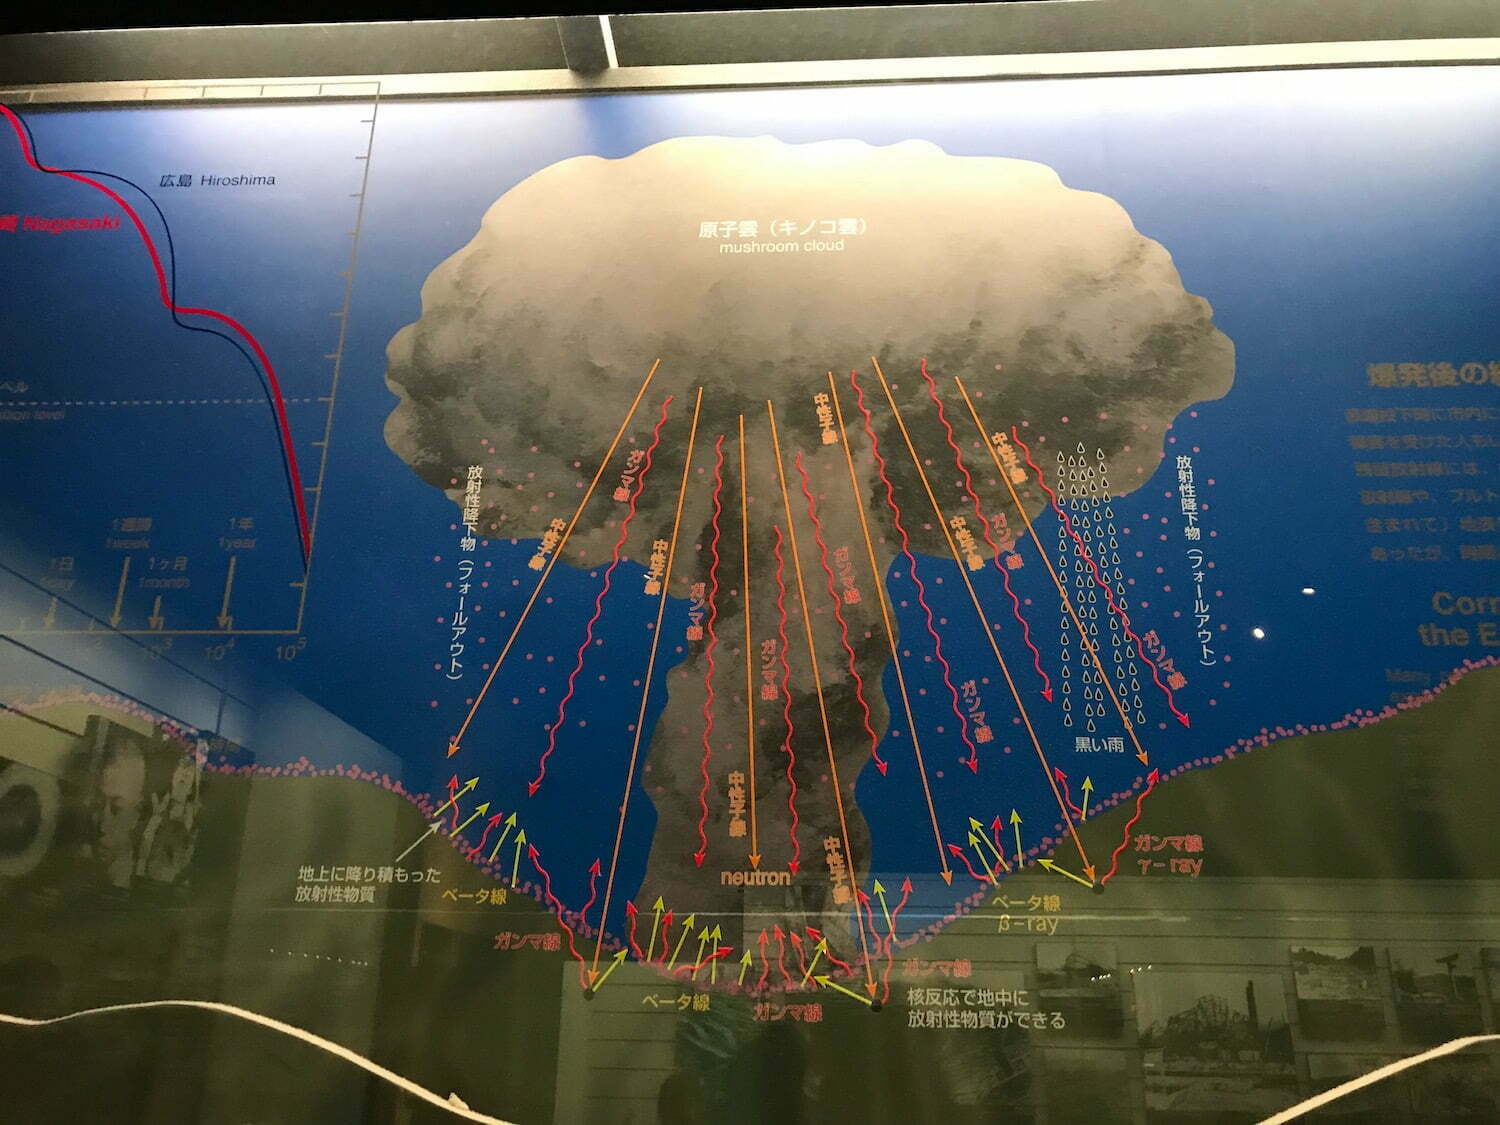 Atomic bomb effect